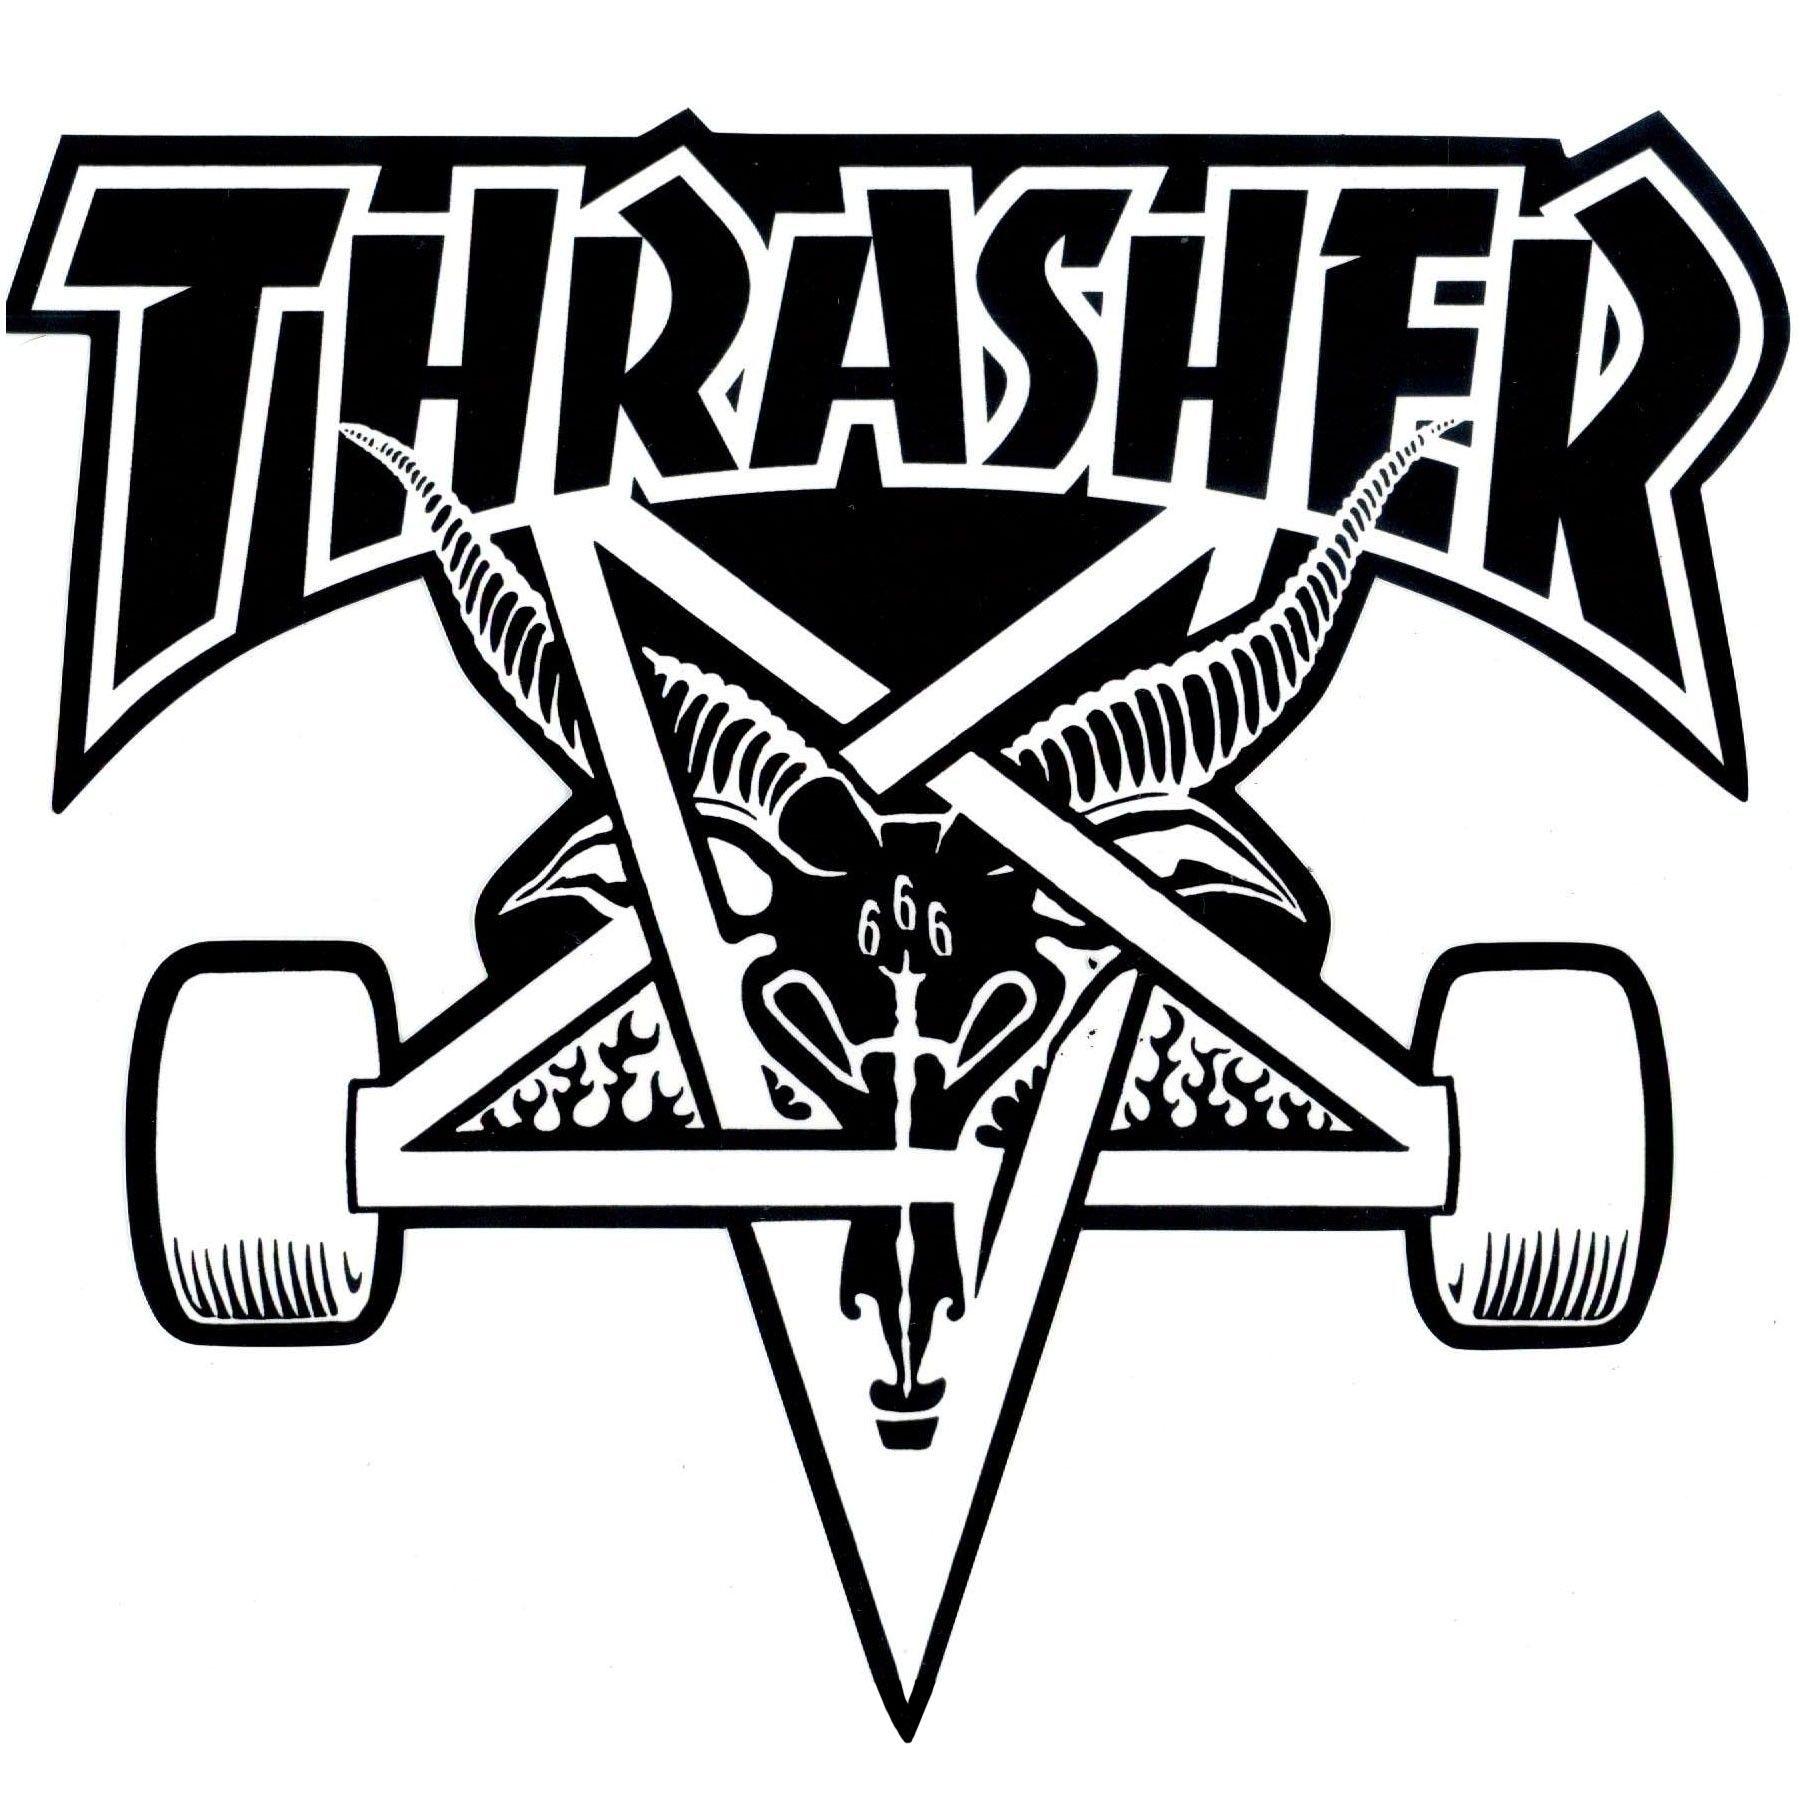 Skeleton Thrasher Logo - Skateboarder drawing logo for free download on Ayoqq.org